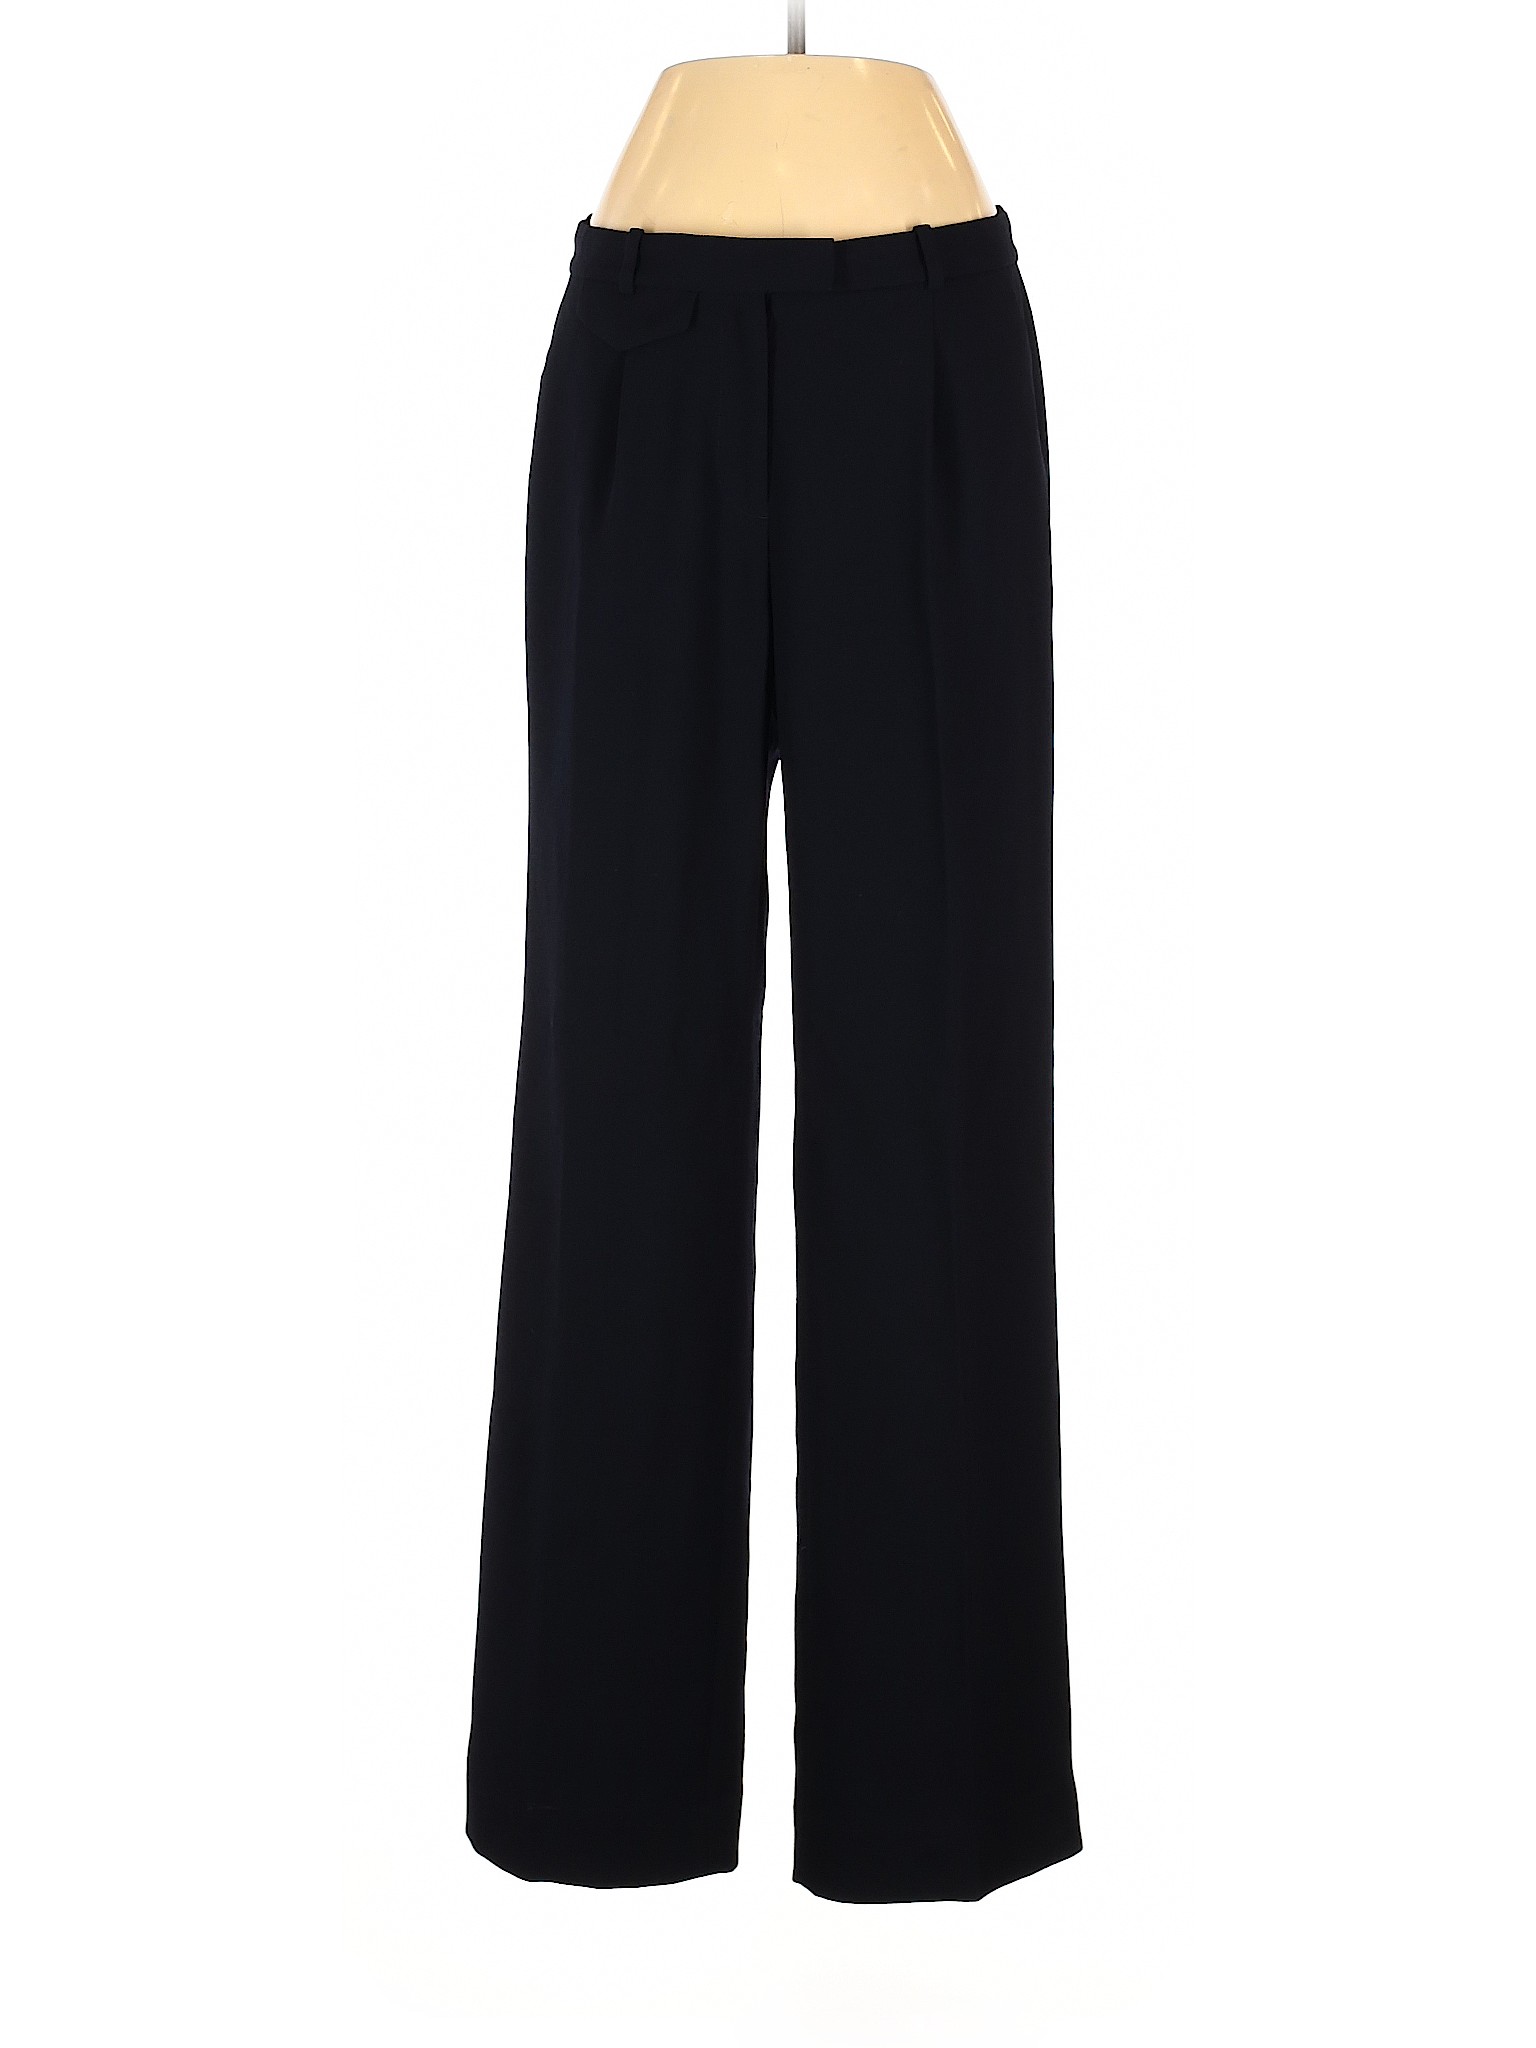 J.Crew Collection Women Black Dress Pants 4 | eBay